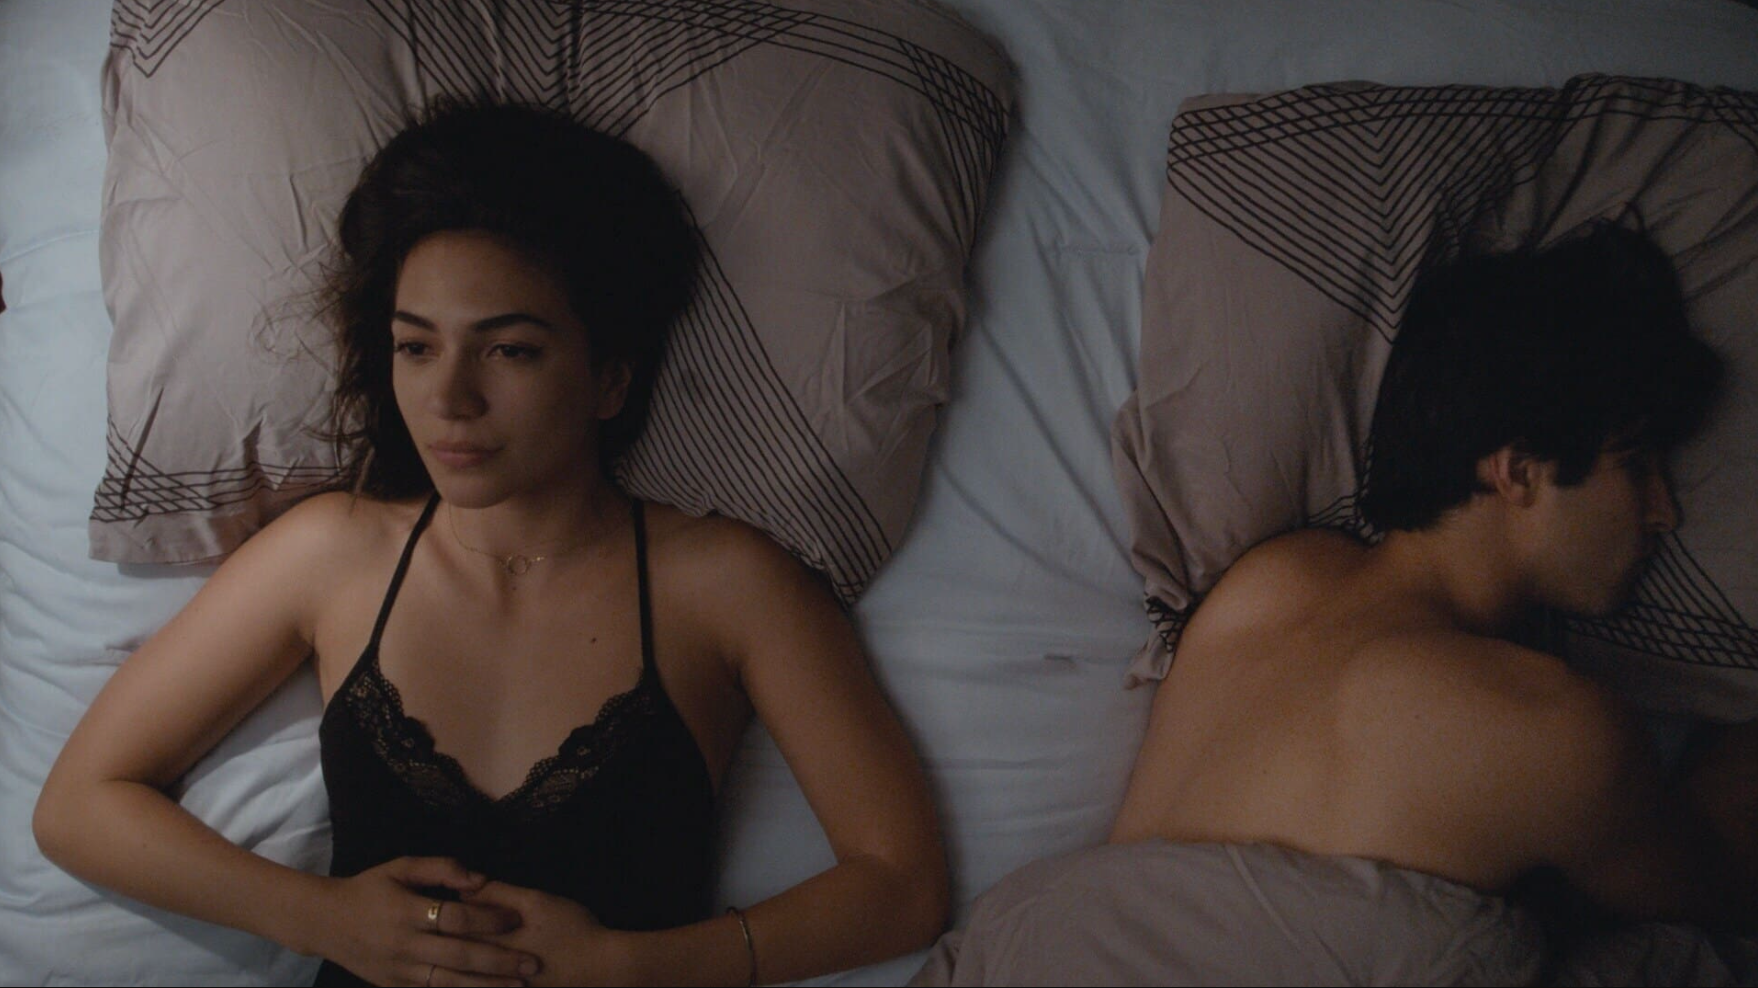 Naughty American Sleeping Force - 25 Sexiest Movies on Amazon Prime - Hot Sex Scenes on Amazon